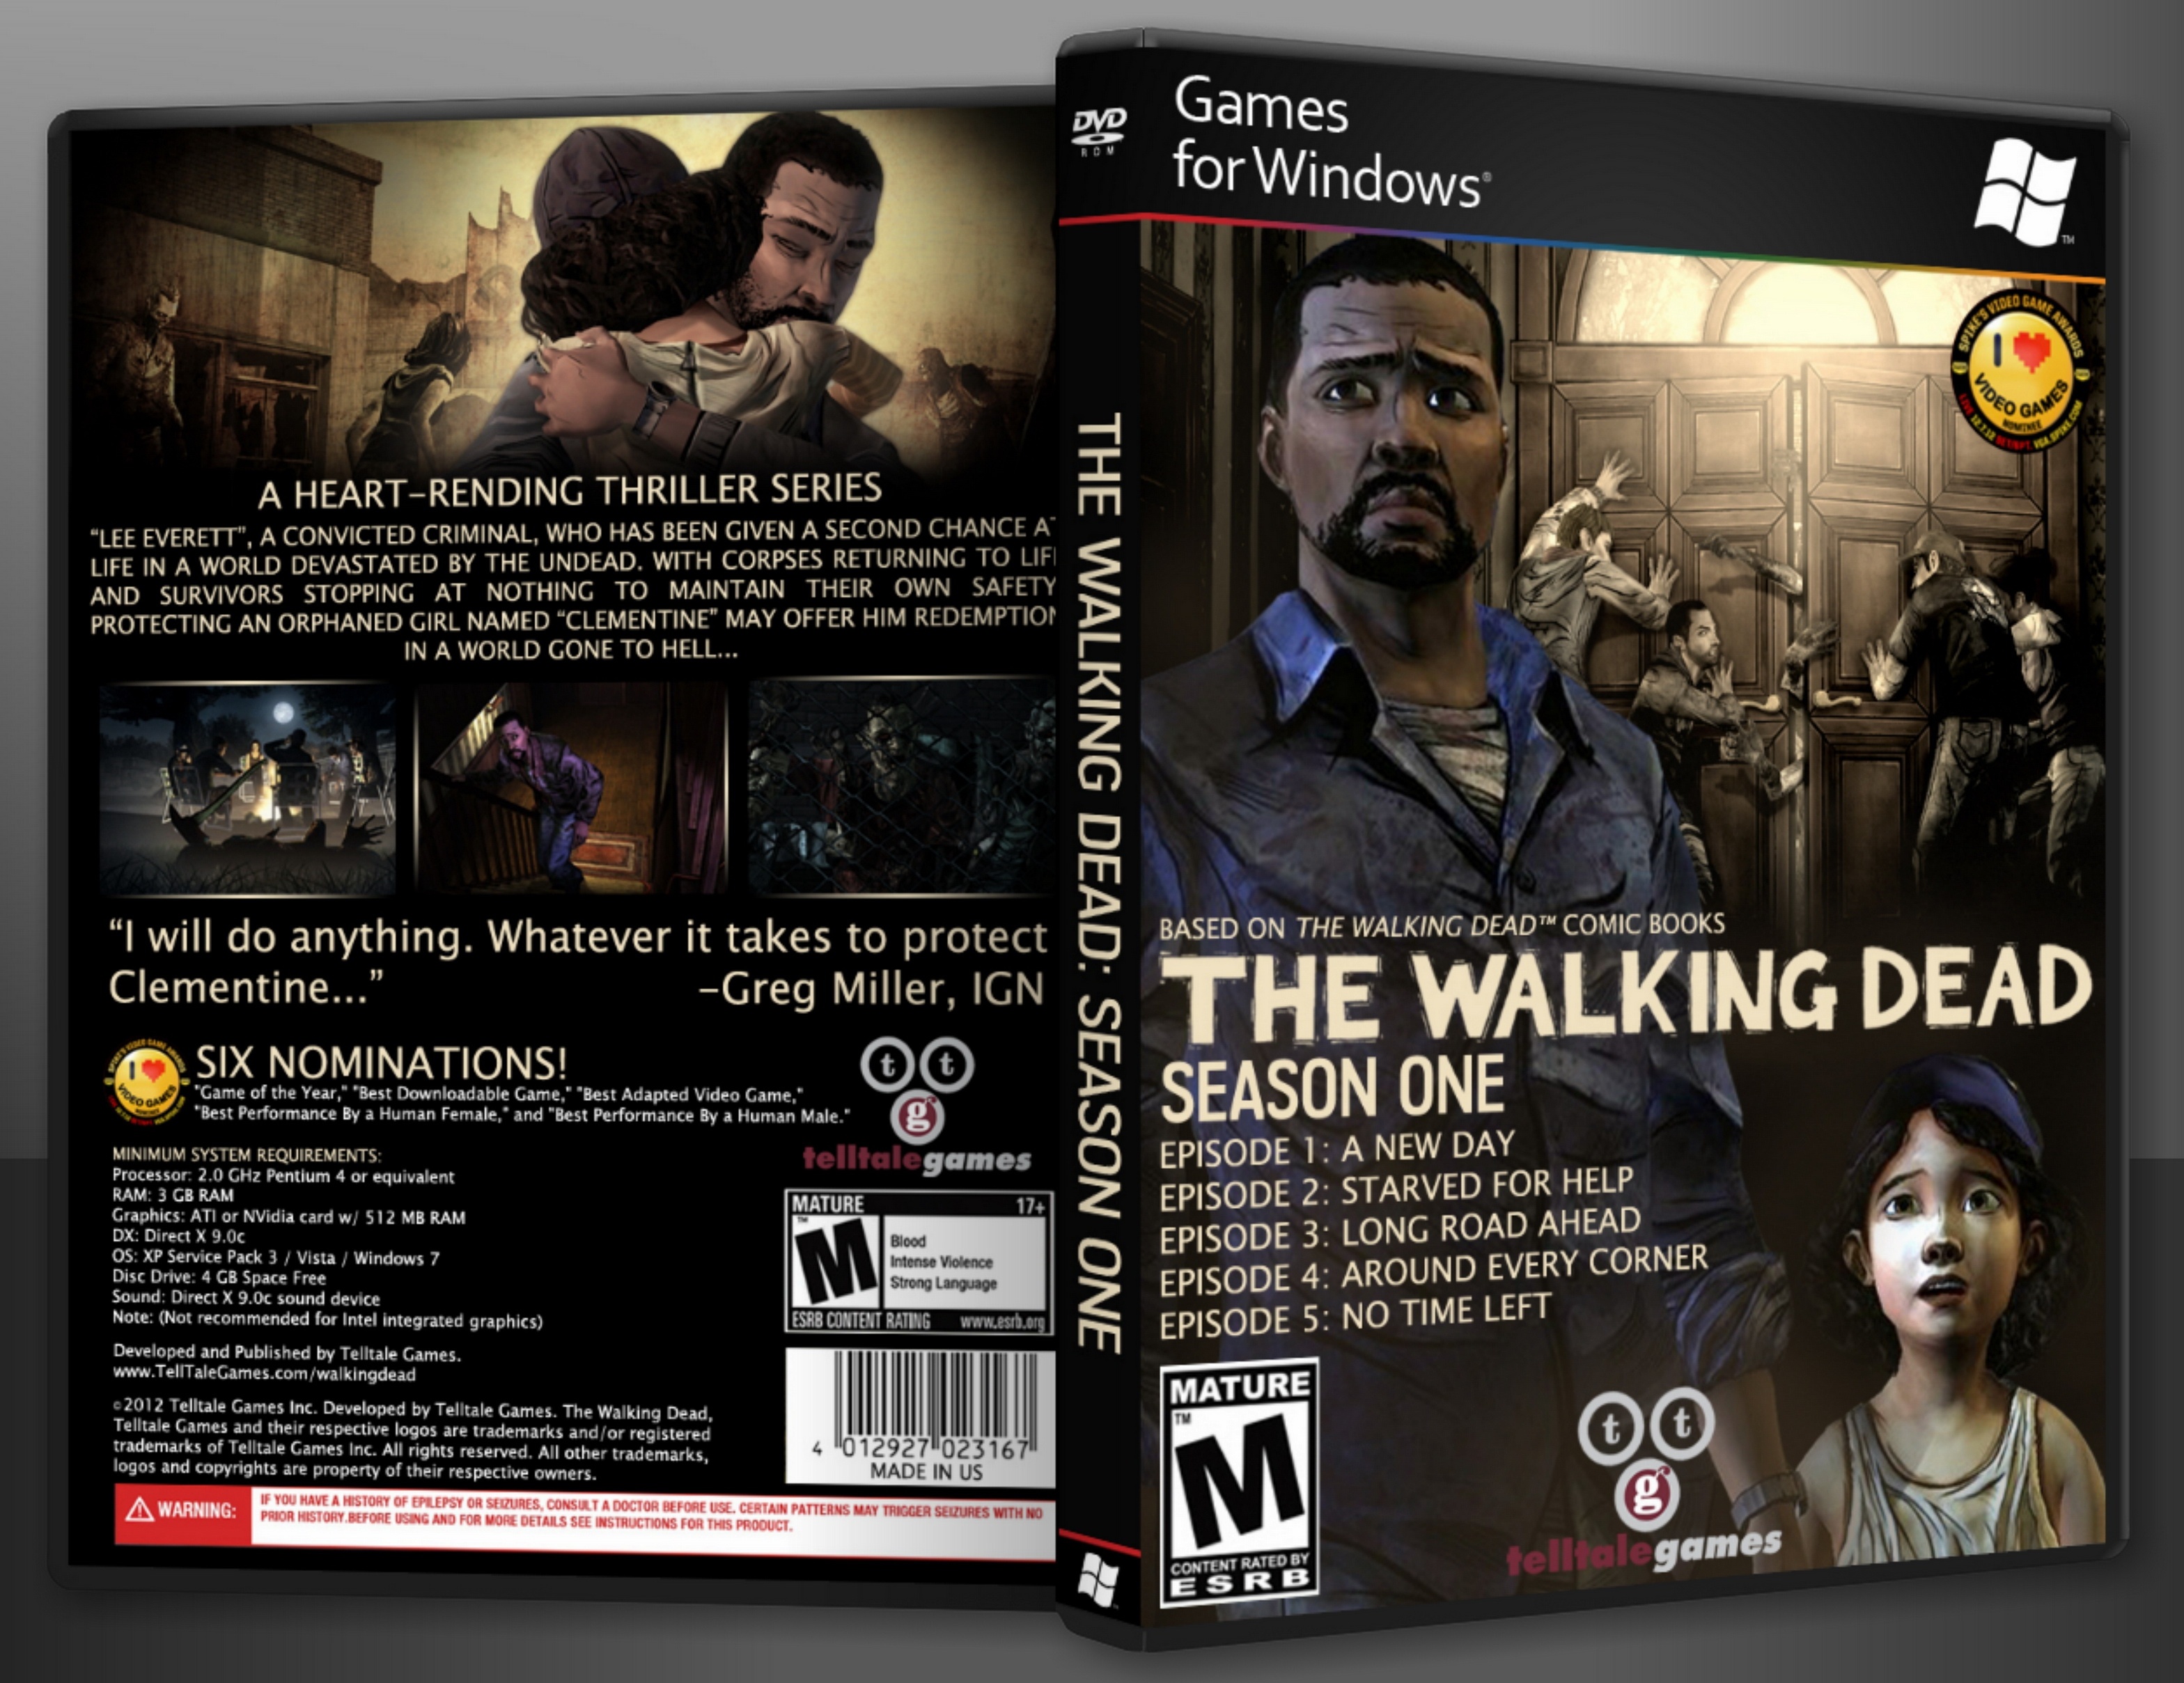 The Walking Dead: Season One box cover